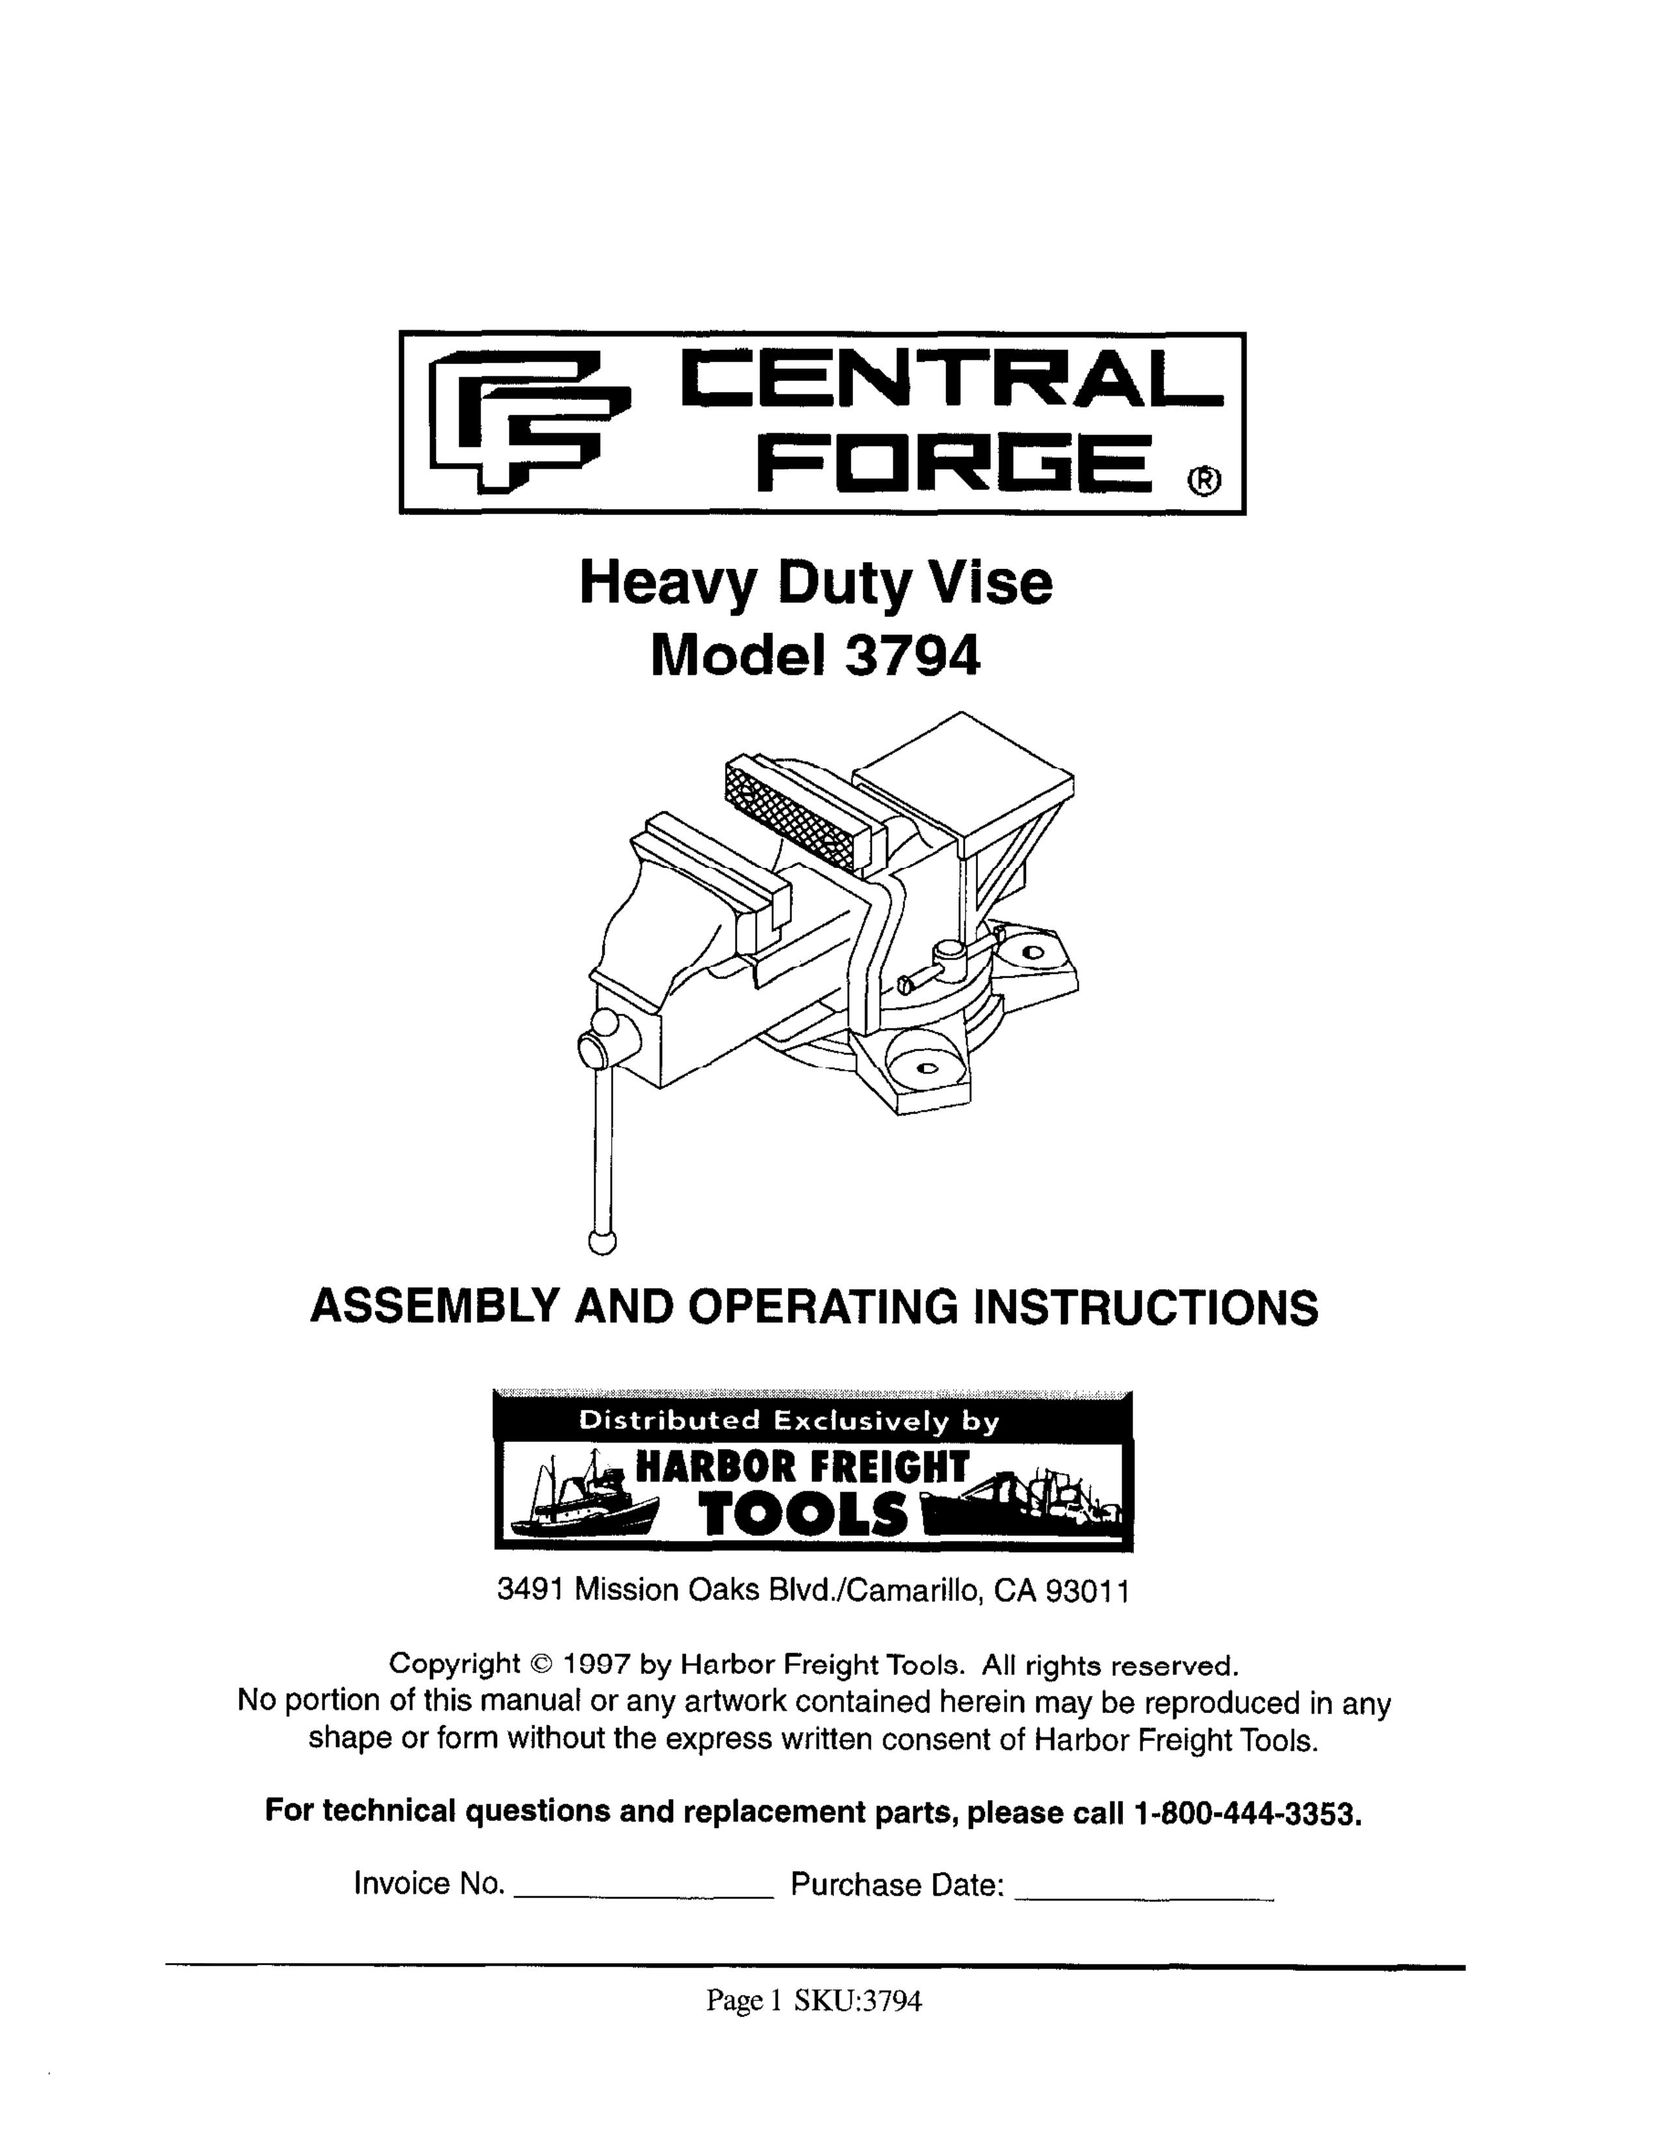 Harbor Freight Tools 3794 Vacuum Cleaner User Manual